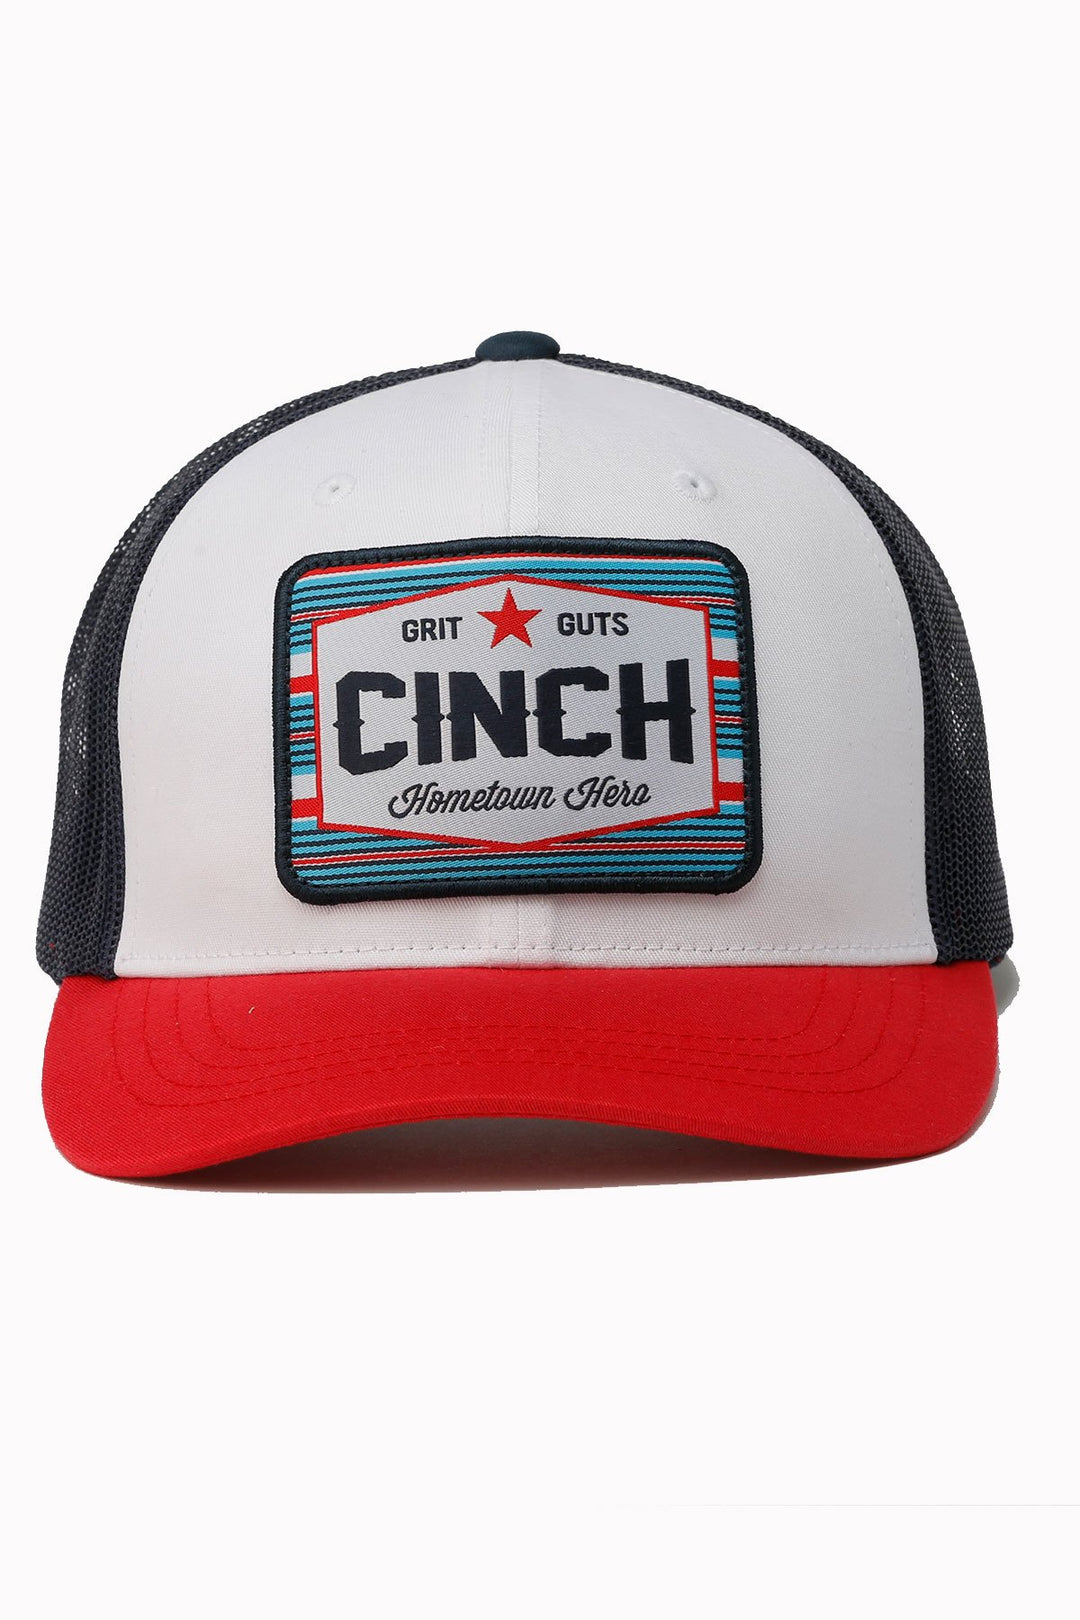 Cinch - Mens Hometown Hero Cap